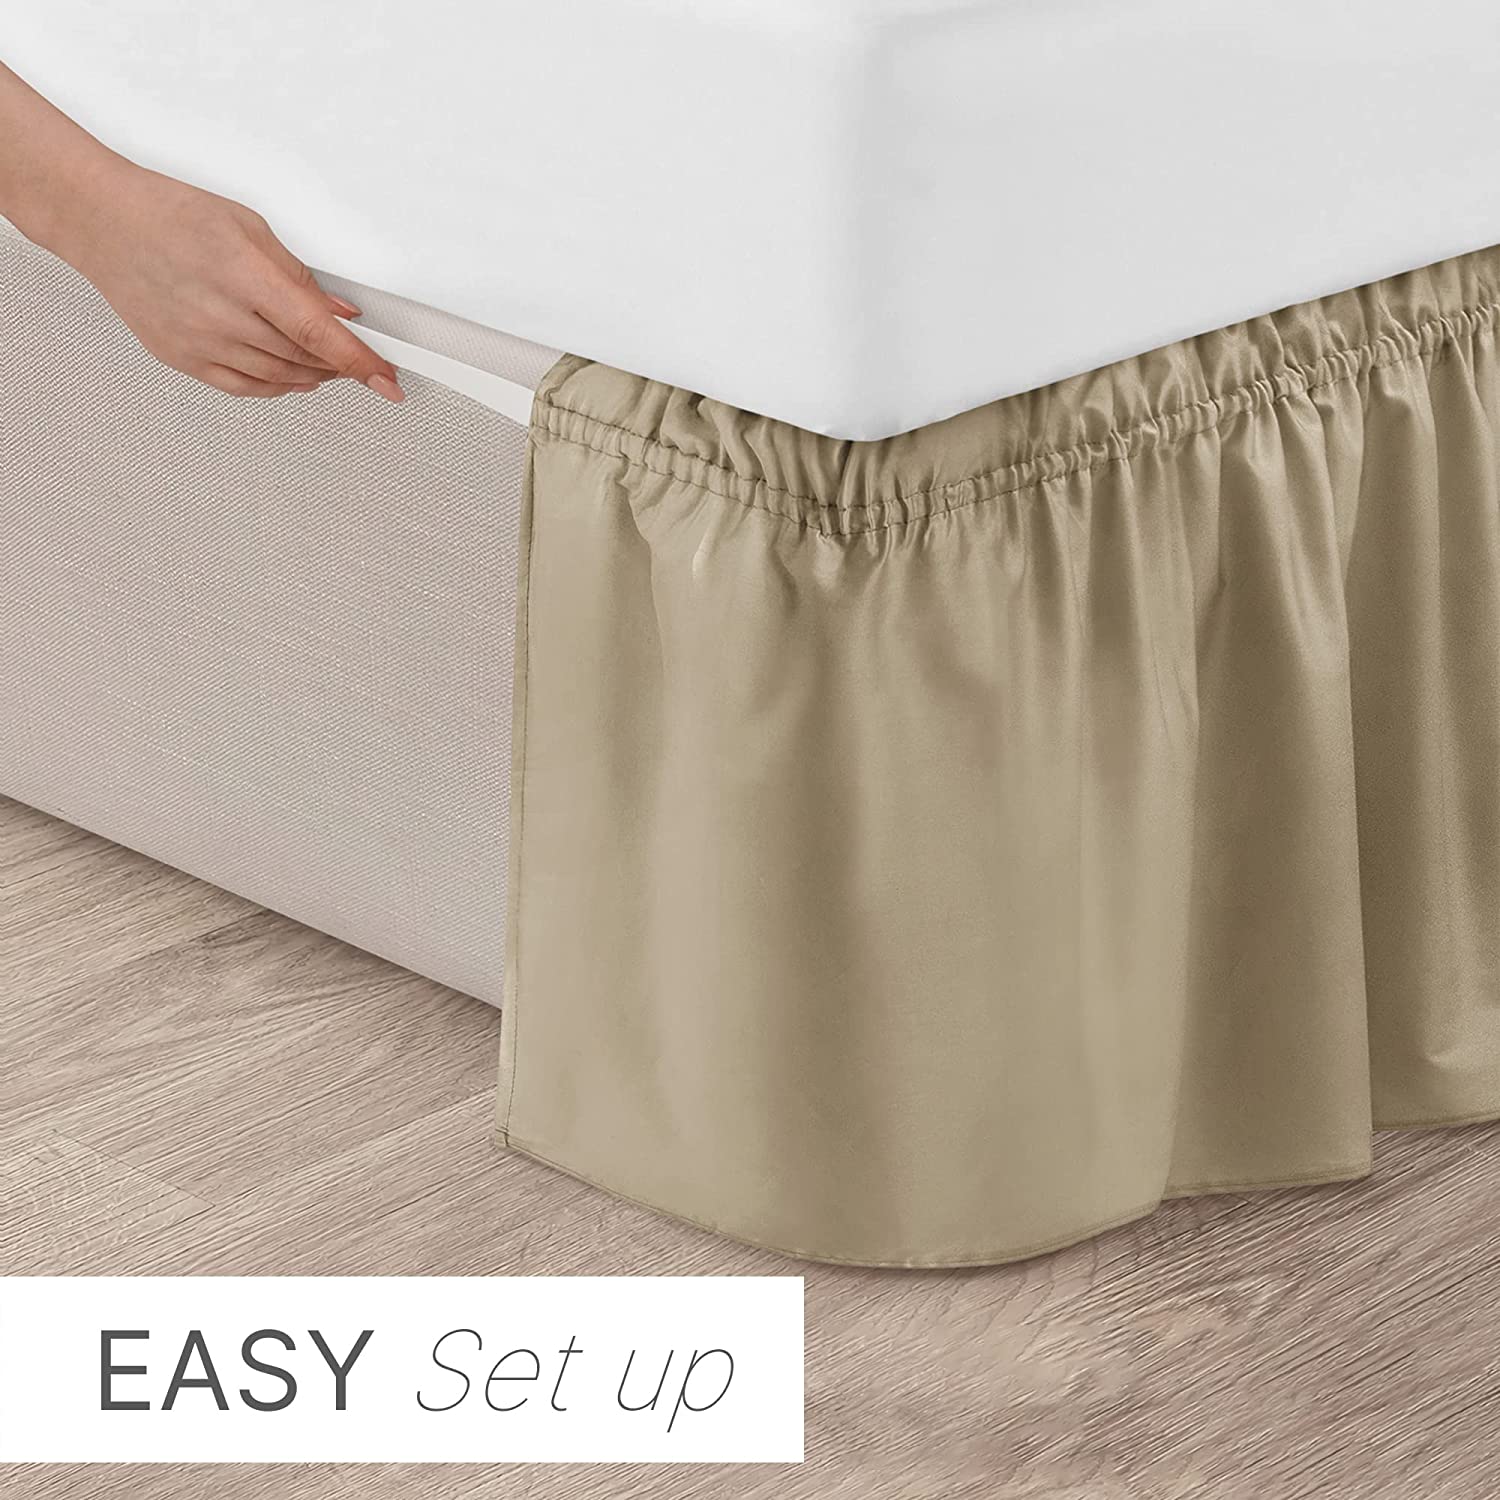 Ruffled Elastic Wrap Around Bedskirt 12 Inch Drop - Beige